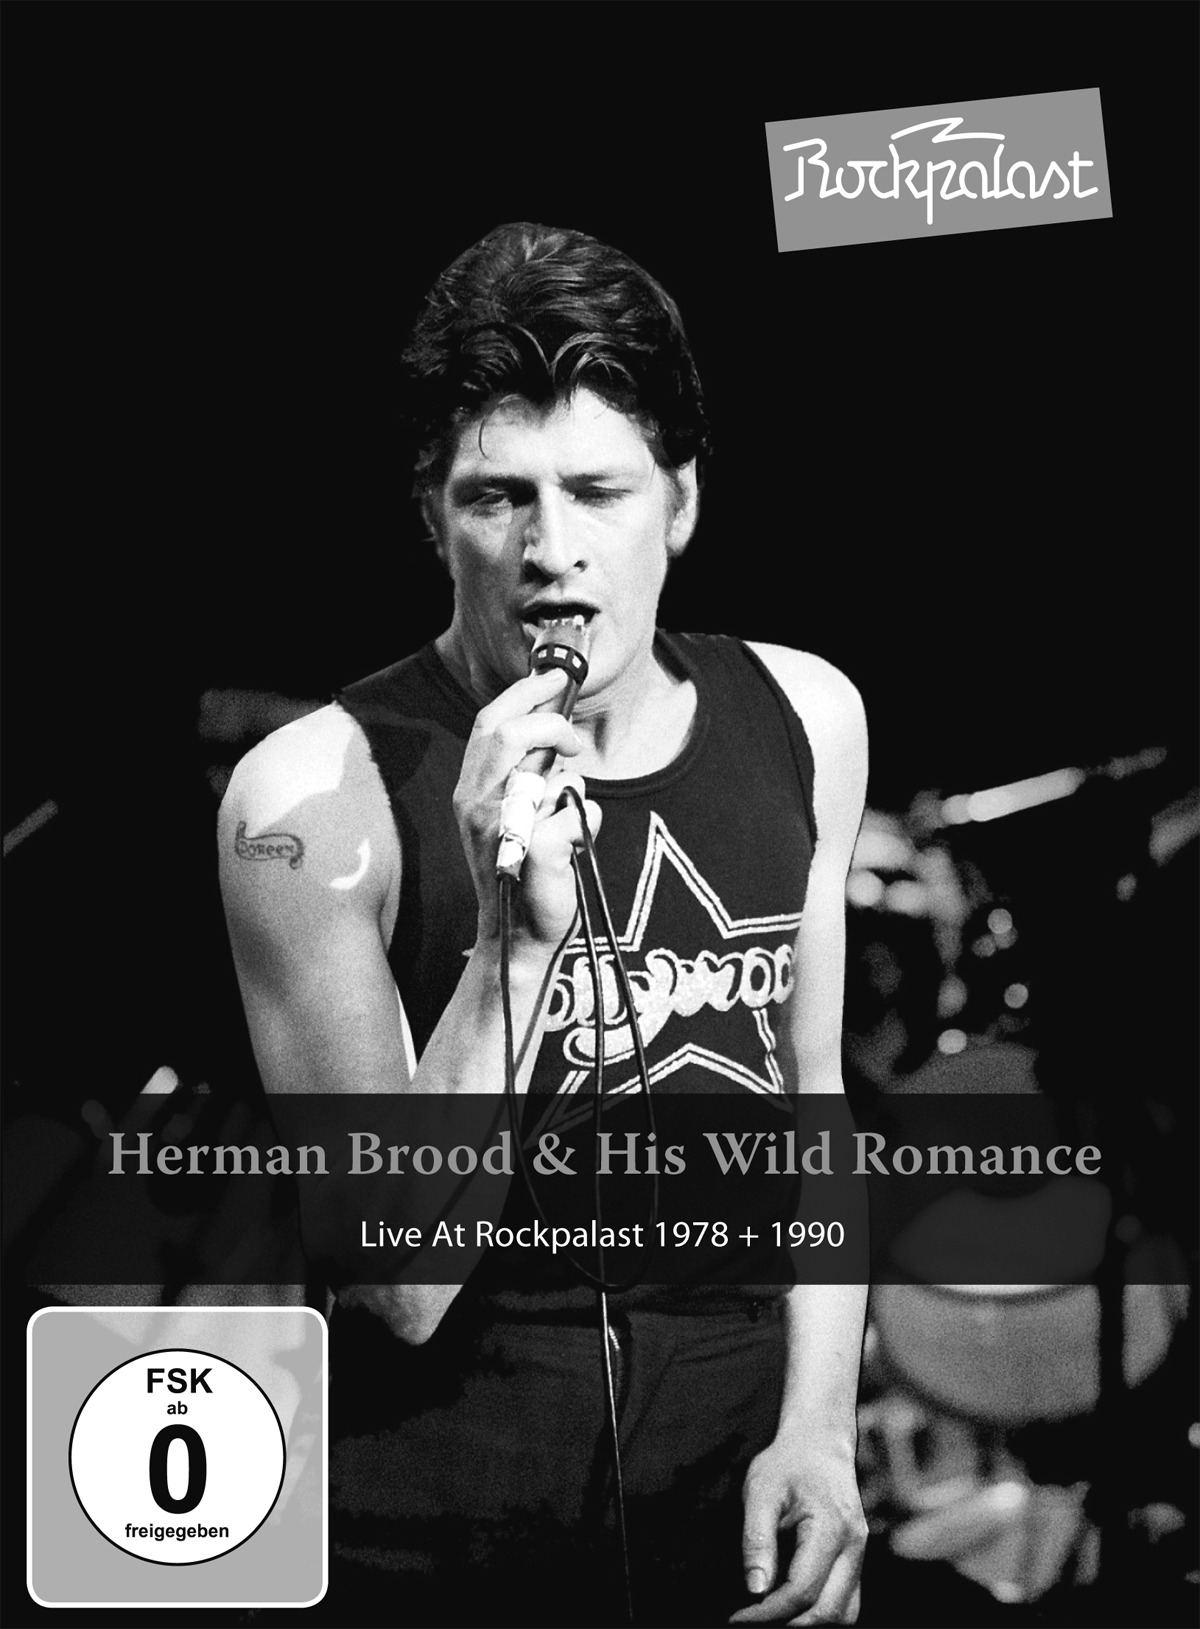 doel influenza Moedig Herman Brood & His Wild Romance - Live At Rockpalast 1978 + 1990 [DVD] -  dutchcharts.nl